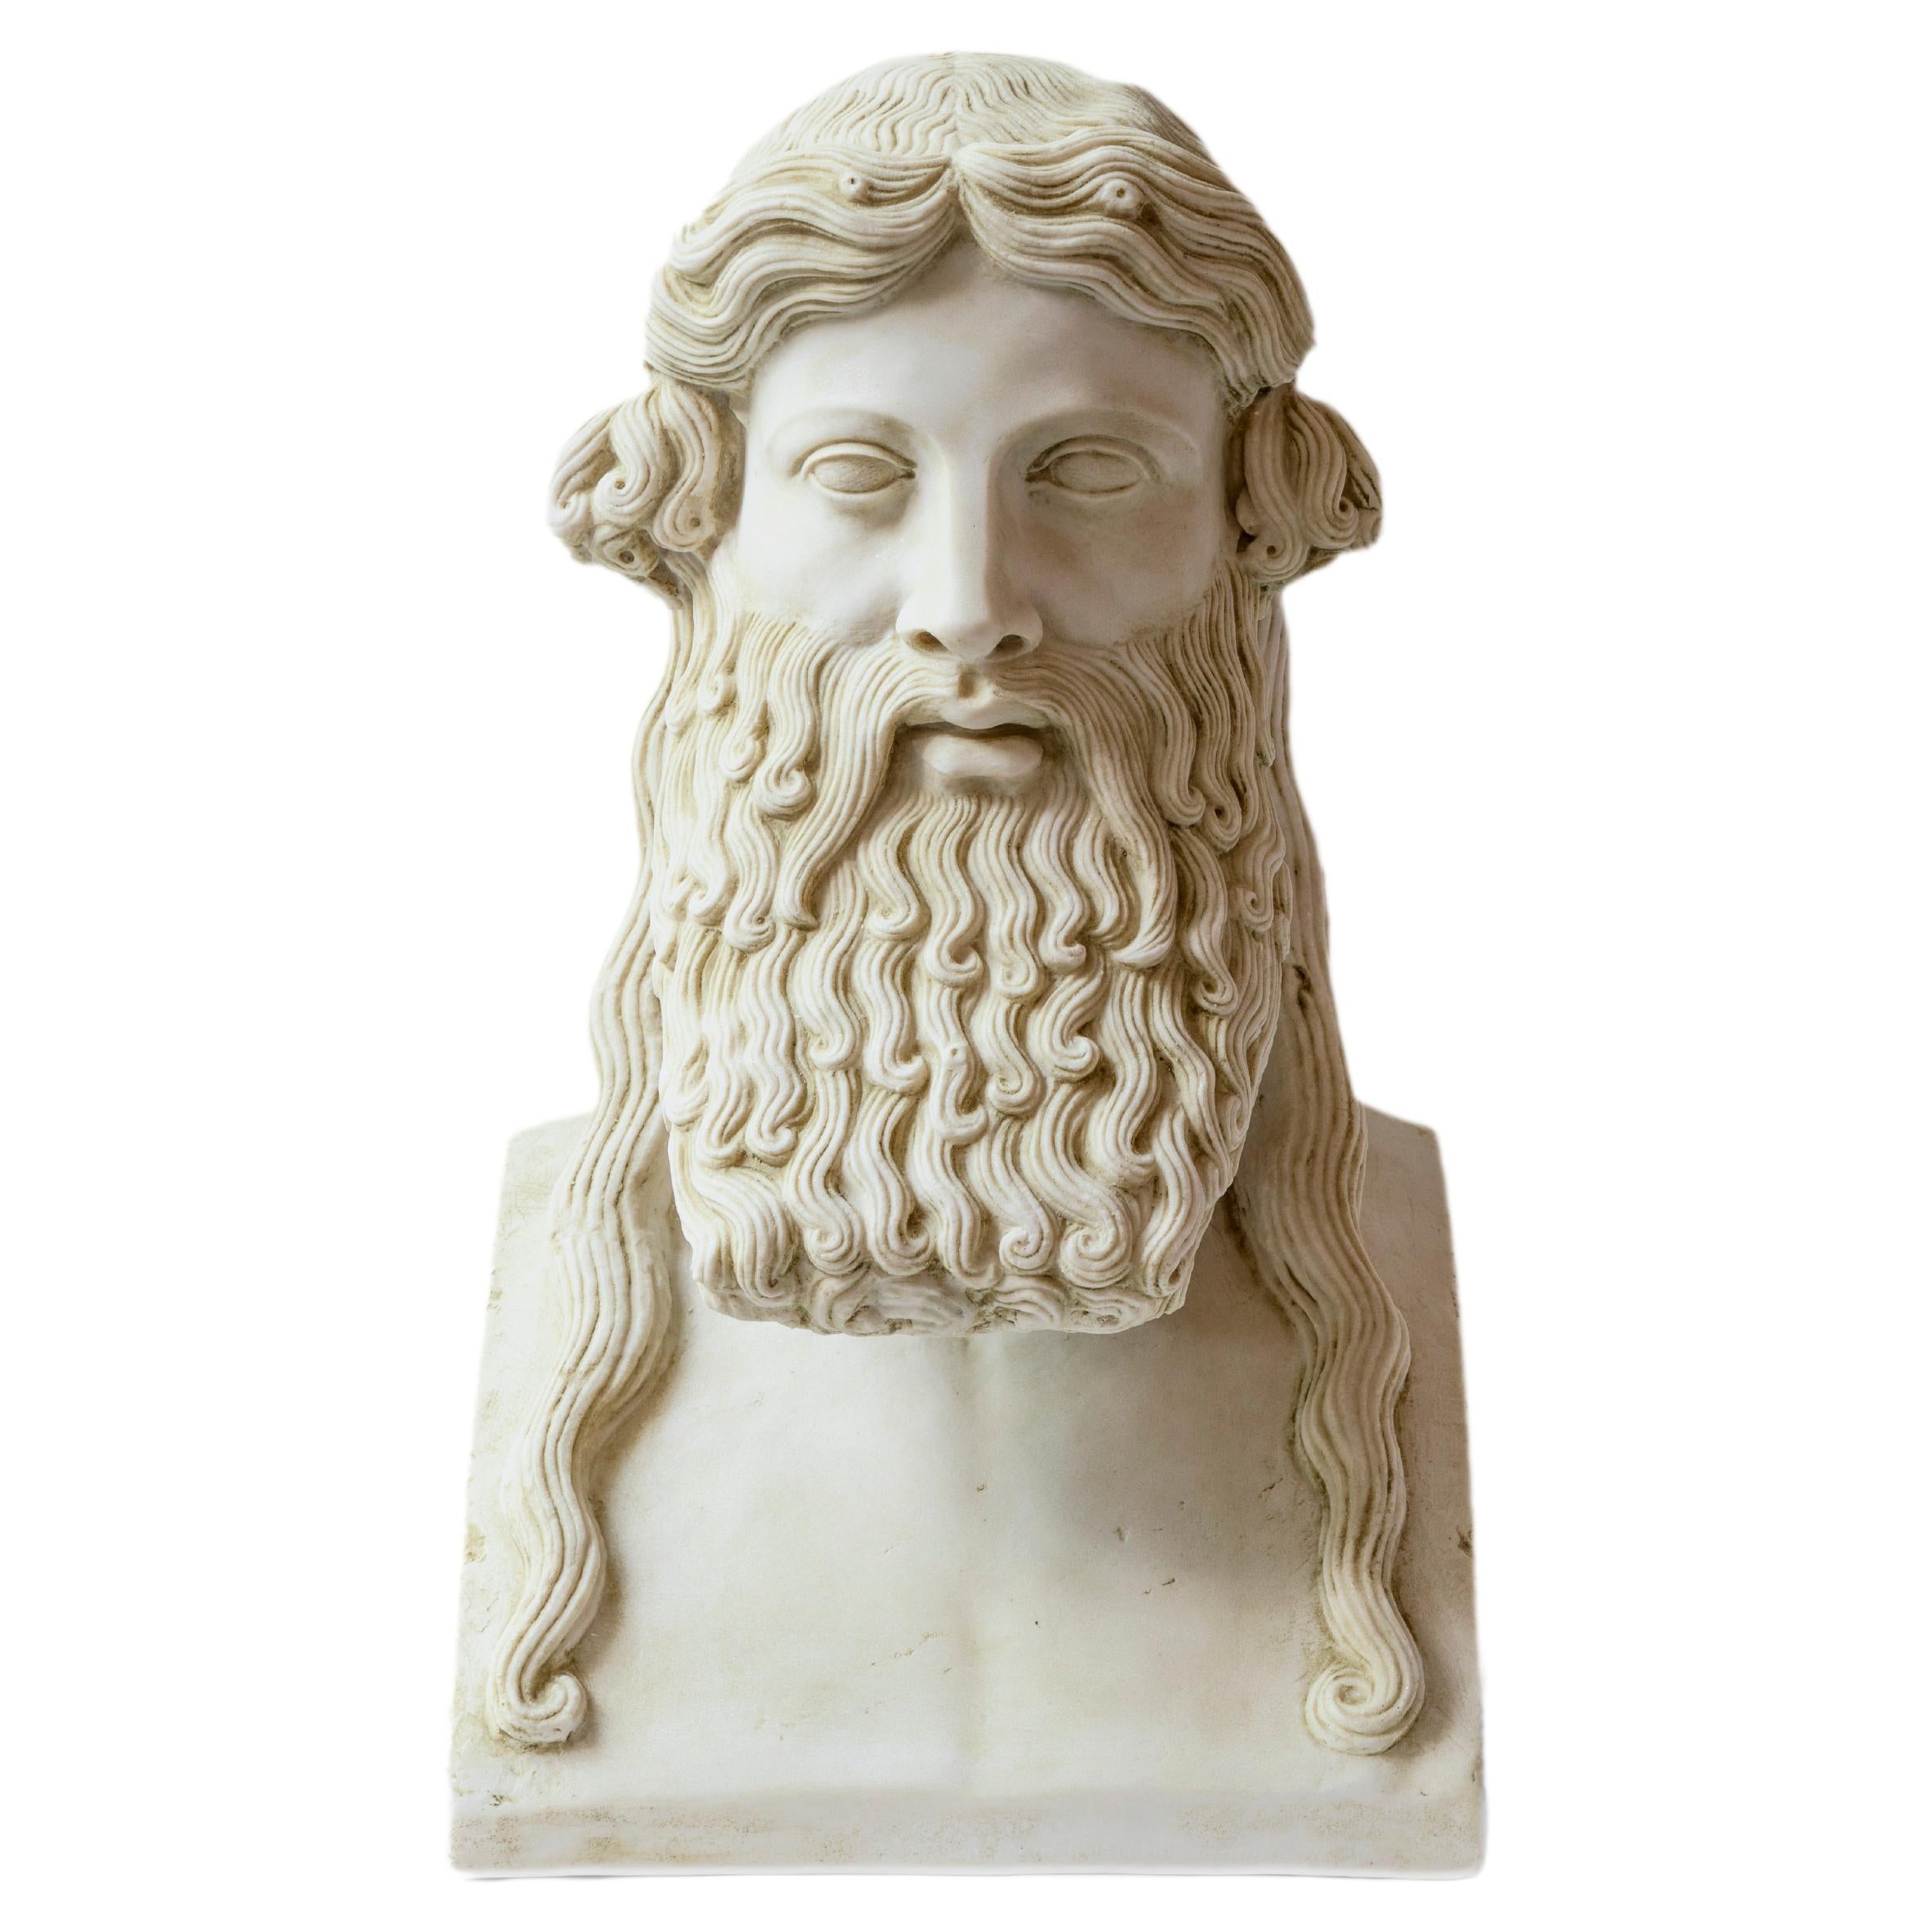 Bärtiger Hermes, hergestellt aus gepresstem Marmorpulver, Museum İzmir im Angebot